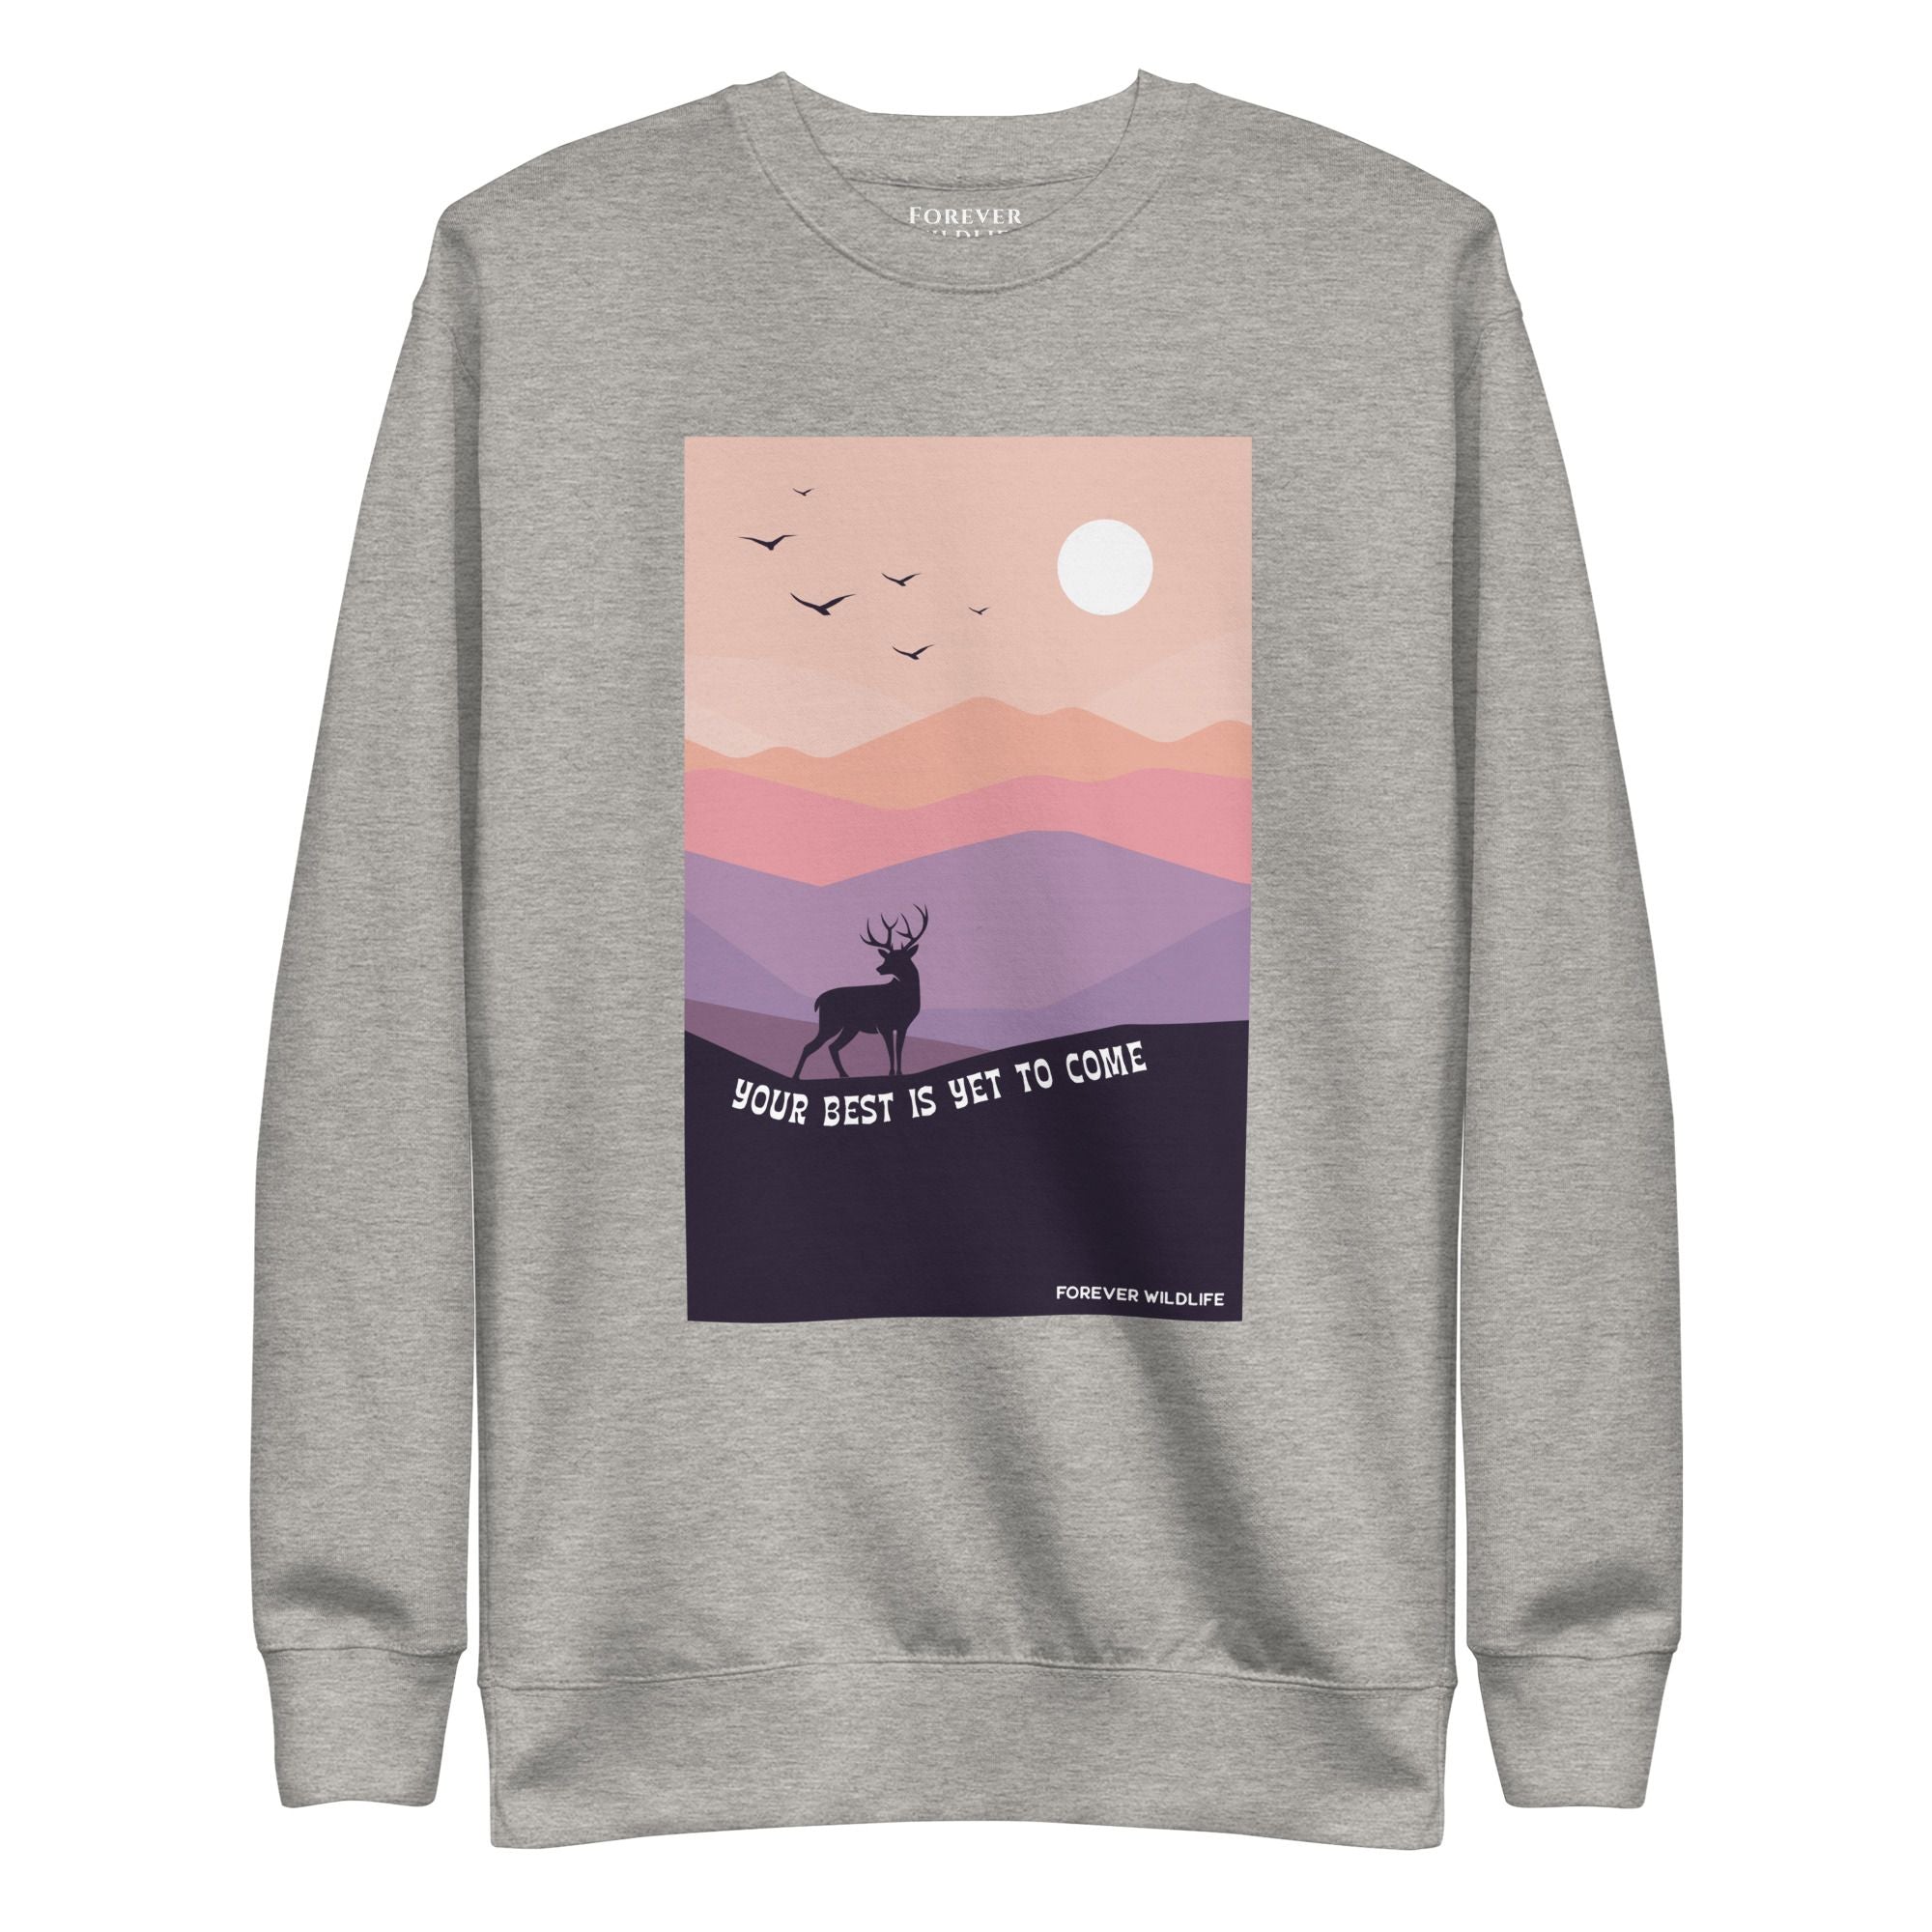 Deer Sweatshirt in Grey-Premium Wildlife Animal Inspiration Sweatshirt Design with 'Your Best Is Yet To Come' text, part of Wildlife Sweatshirts & Clothing from Forever Wildlife.